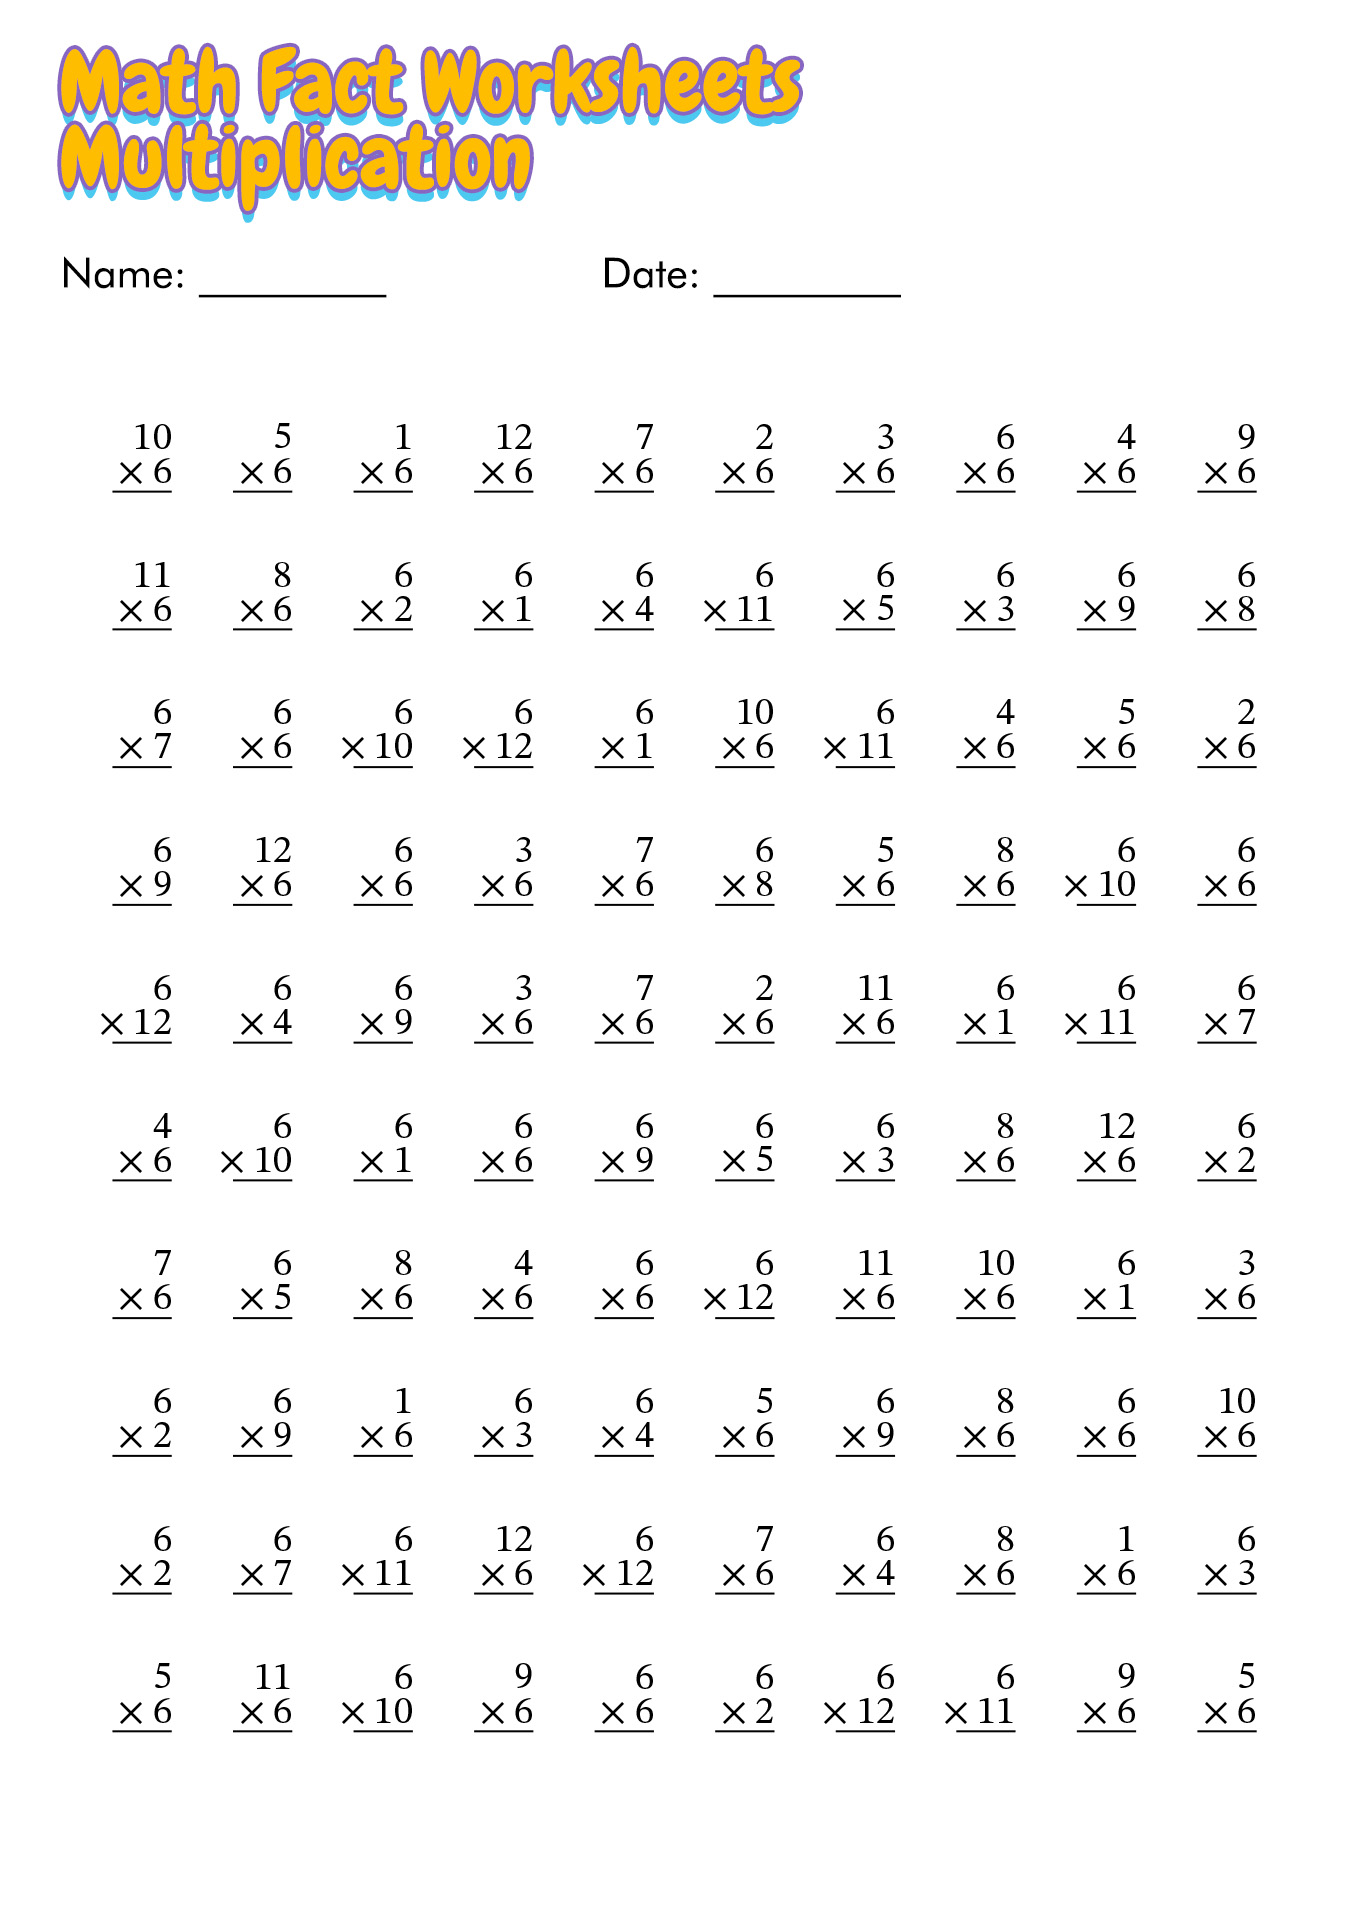 Math Fact Worksheets Multiplication Printable Image